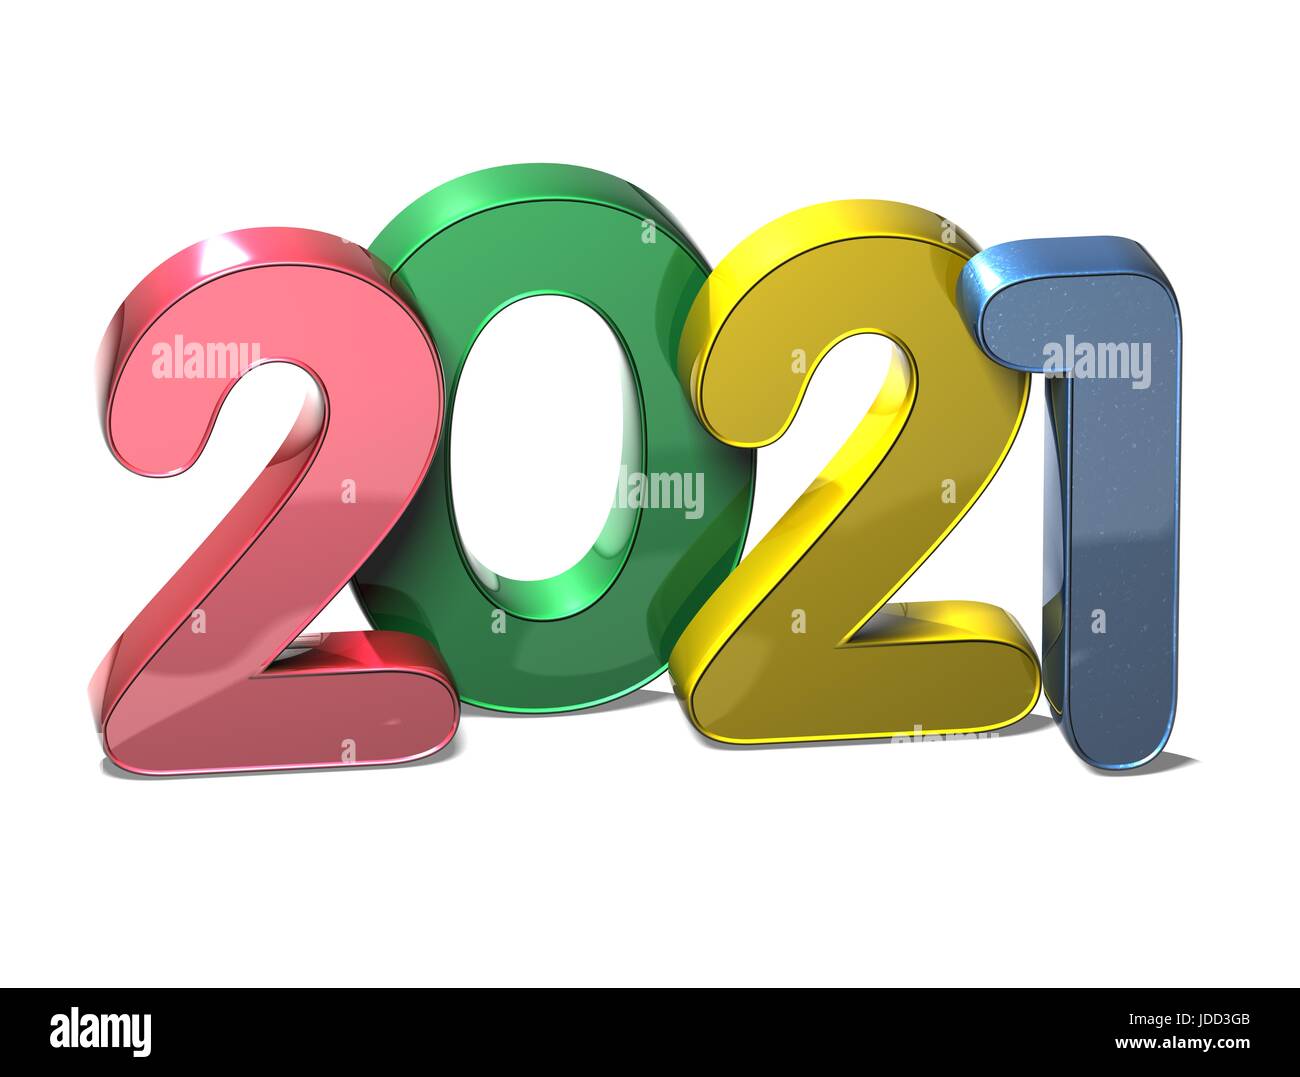 Calendar 2021 Photos & Calendar 2021 Images - Alamy1300 x 1077